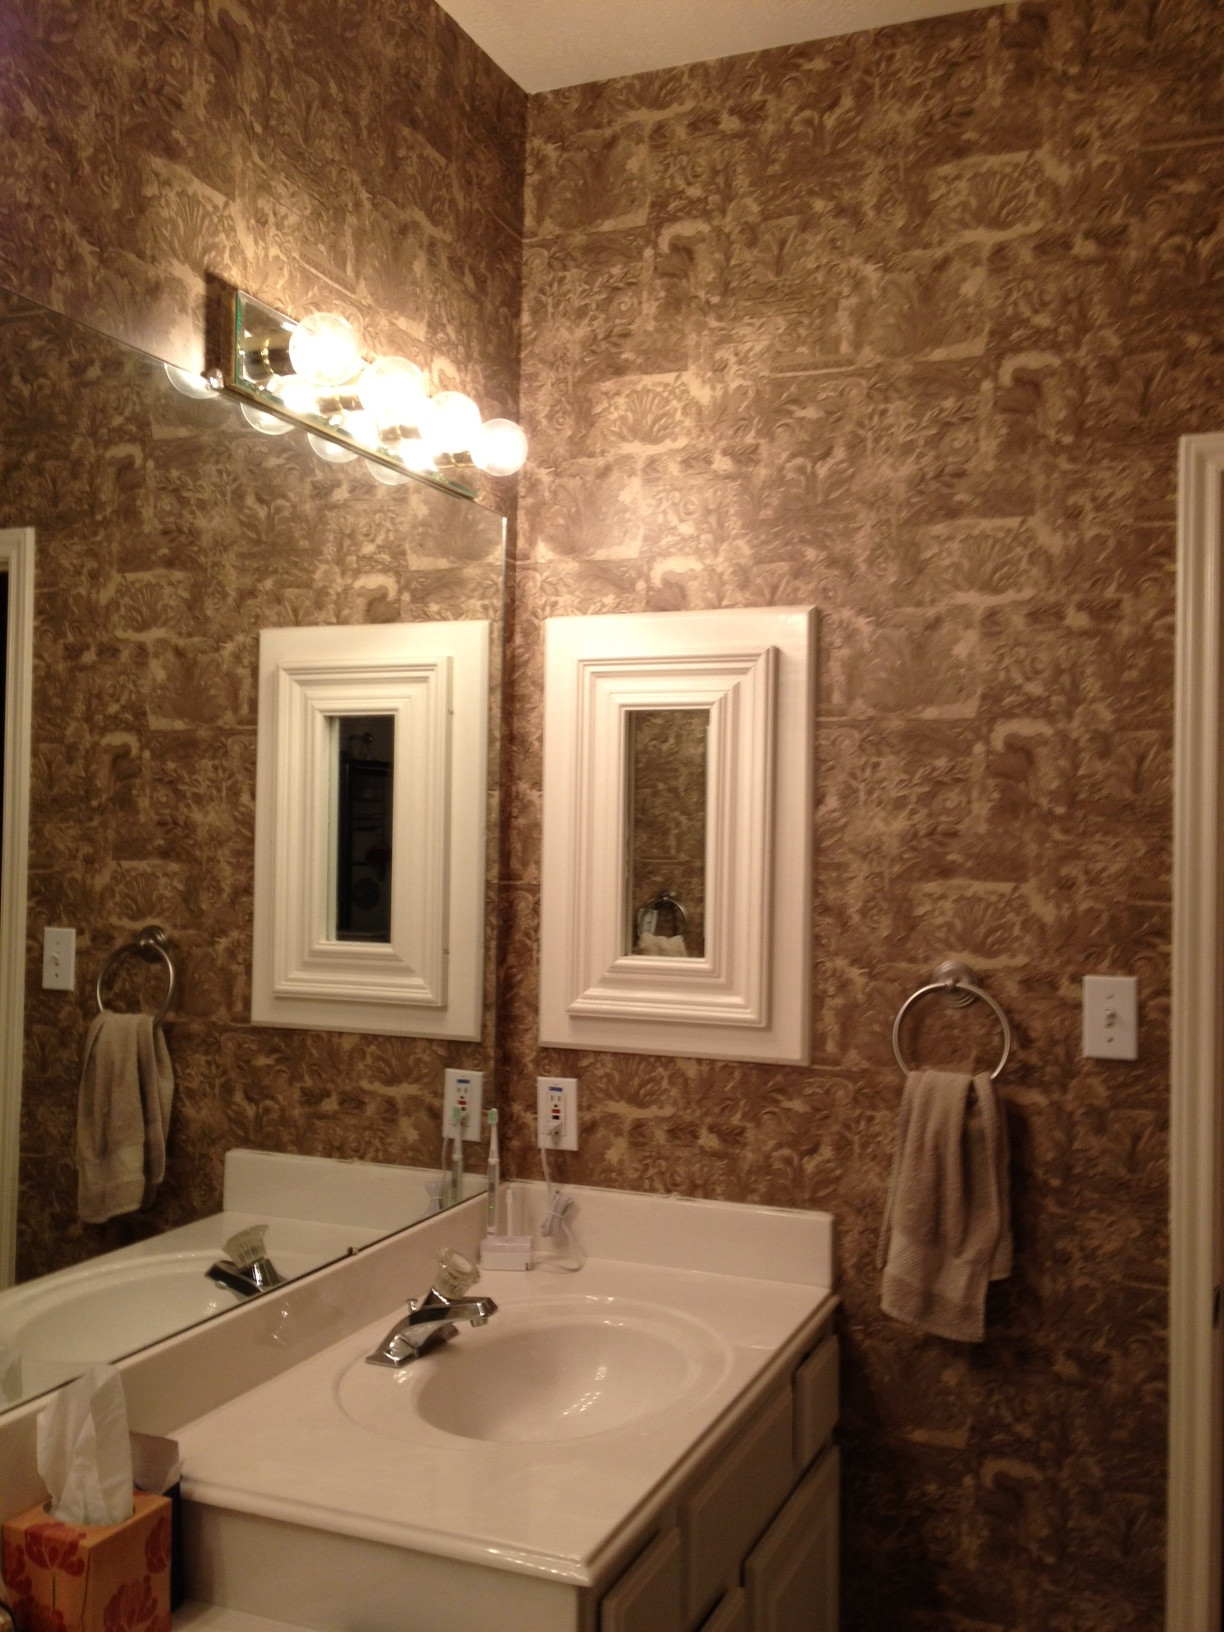 Textured Bathroom Wallpaper
 15 Stunning Bathroom Wallpaper Design Ideas